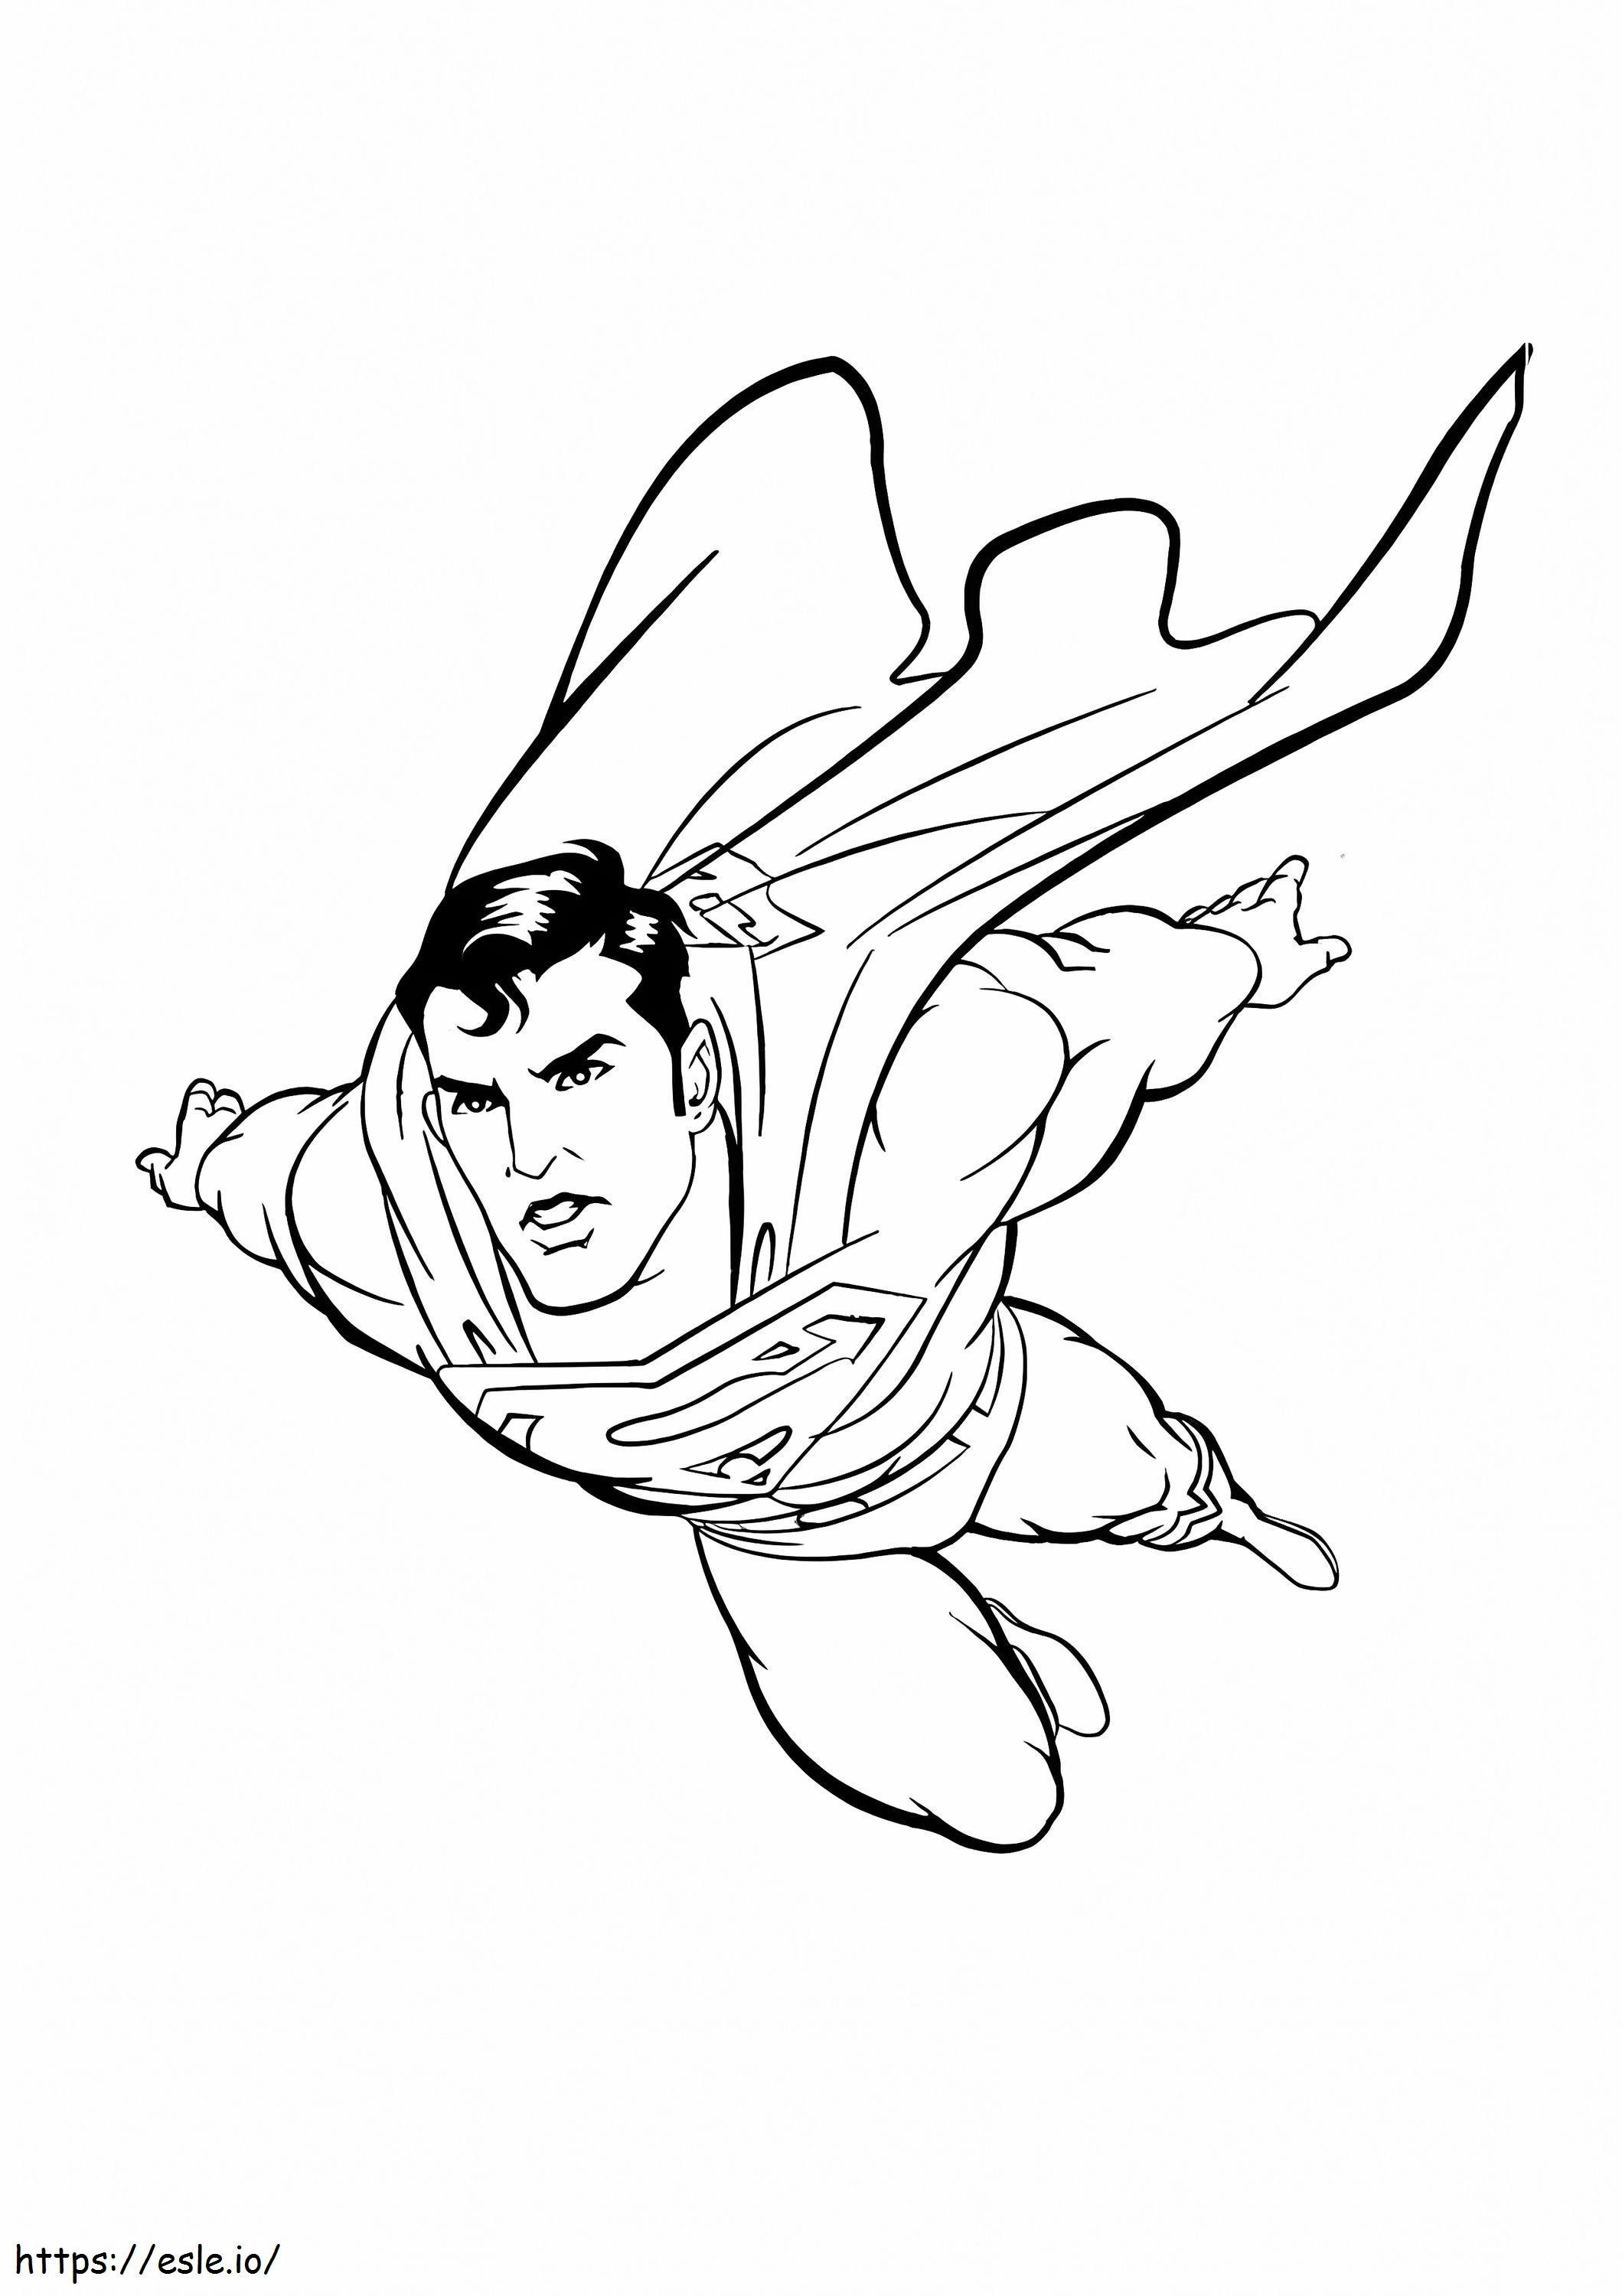 Free Printable Superman coloring page